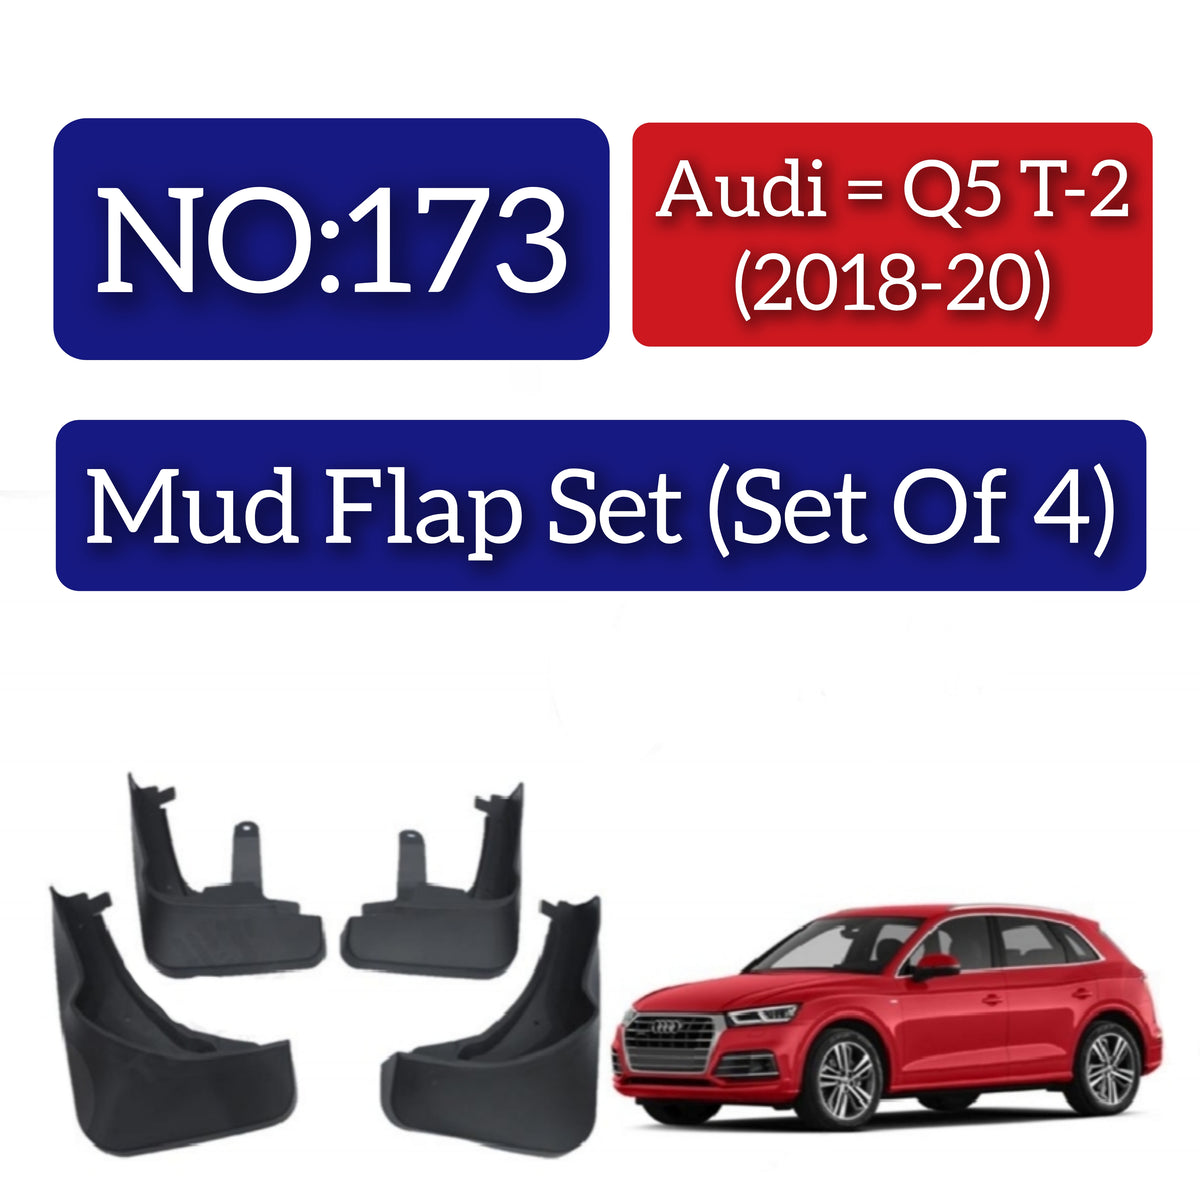 Audi Q5 T-2 (2018-20) Mud Flap Set (Set of 4) Tag 173